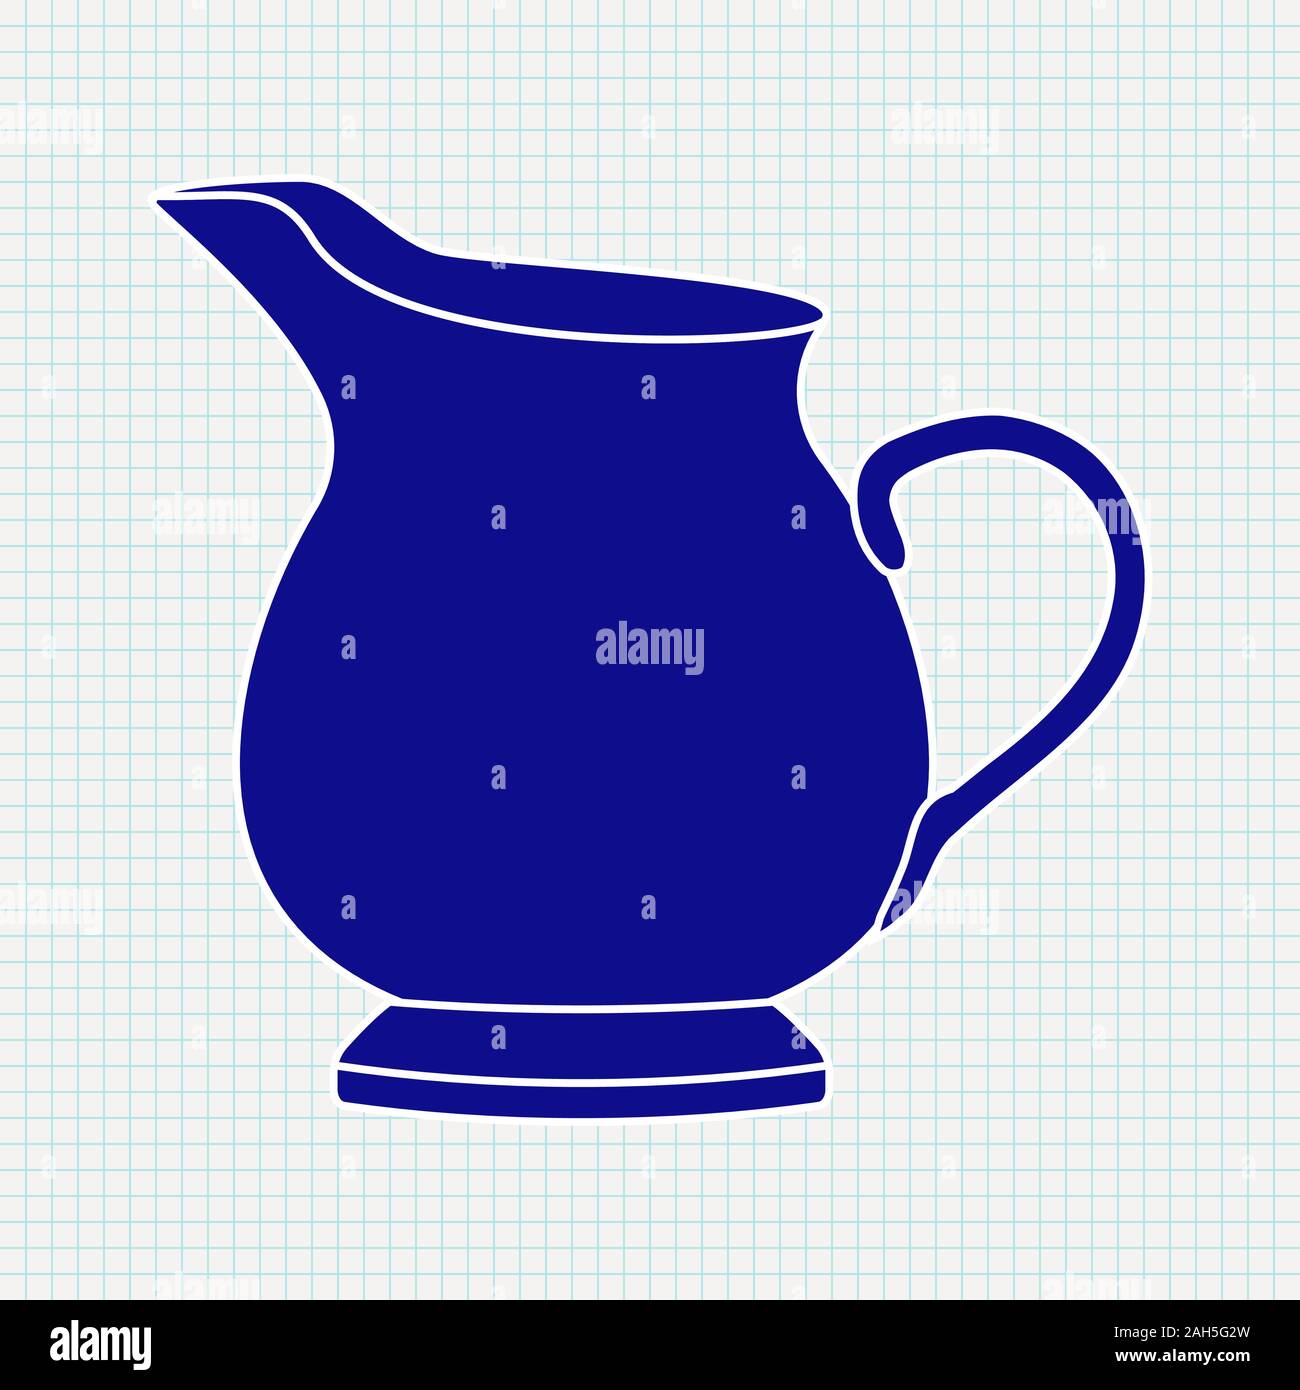 Milk jar. Blue silhouette. Vector illustration on notebook sheet background. Stock Vector